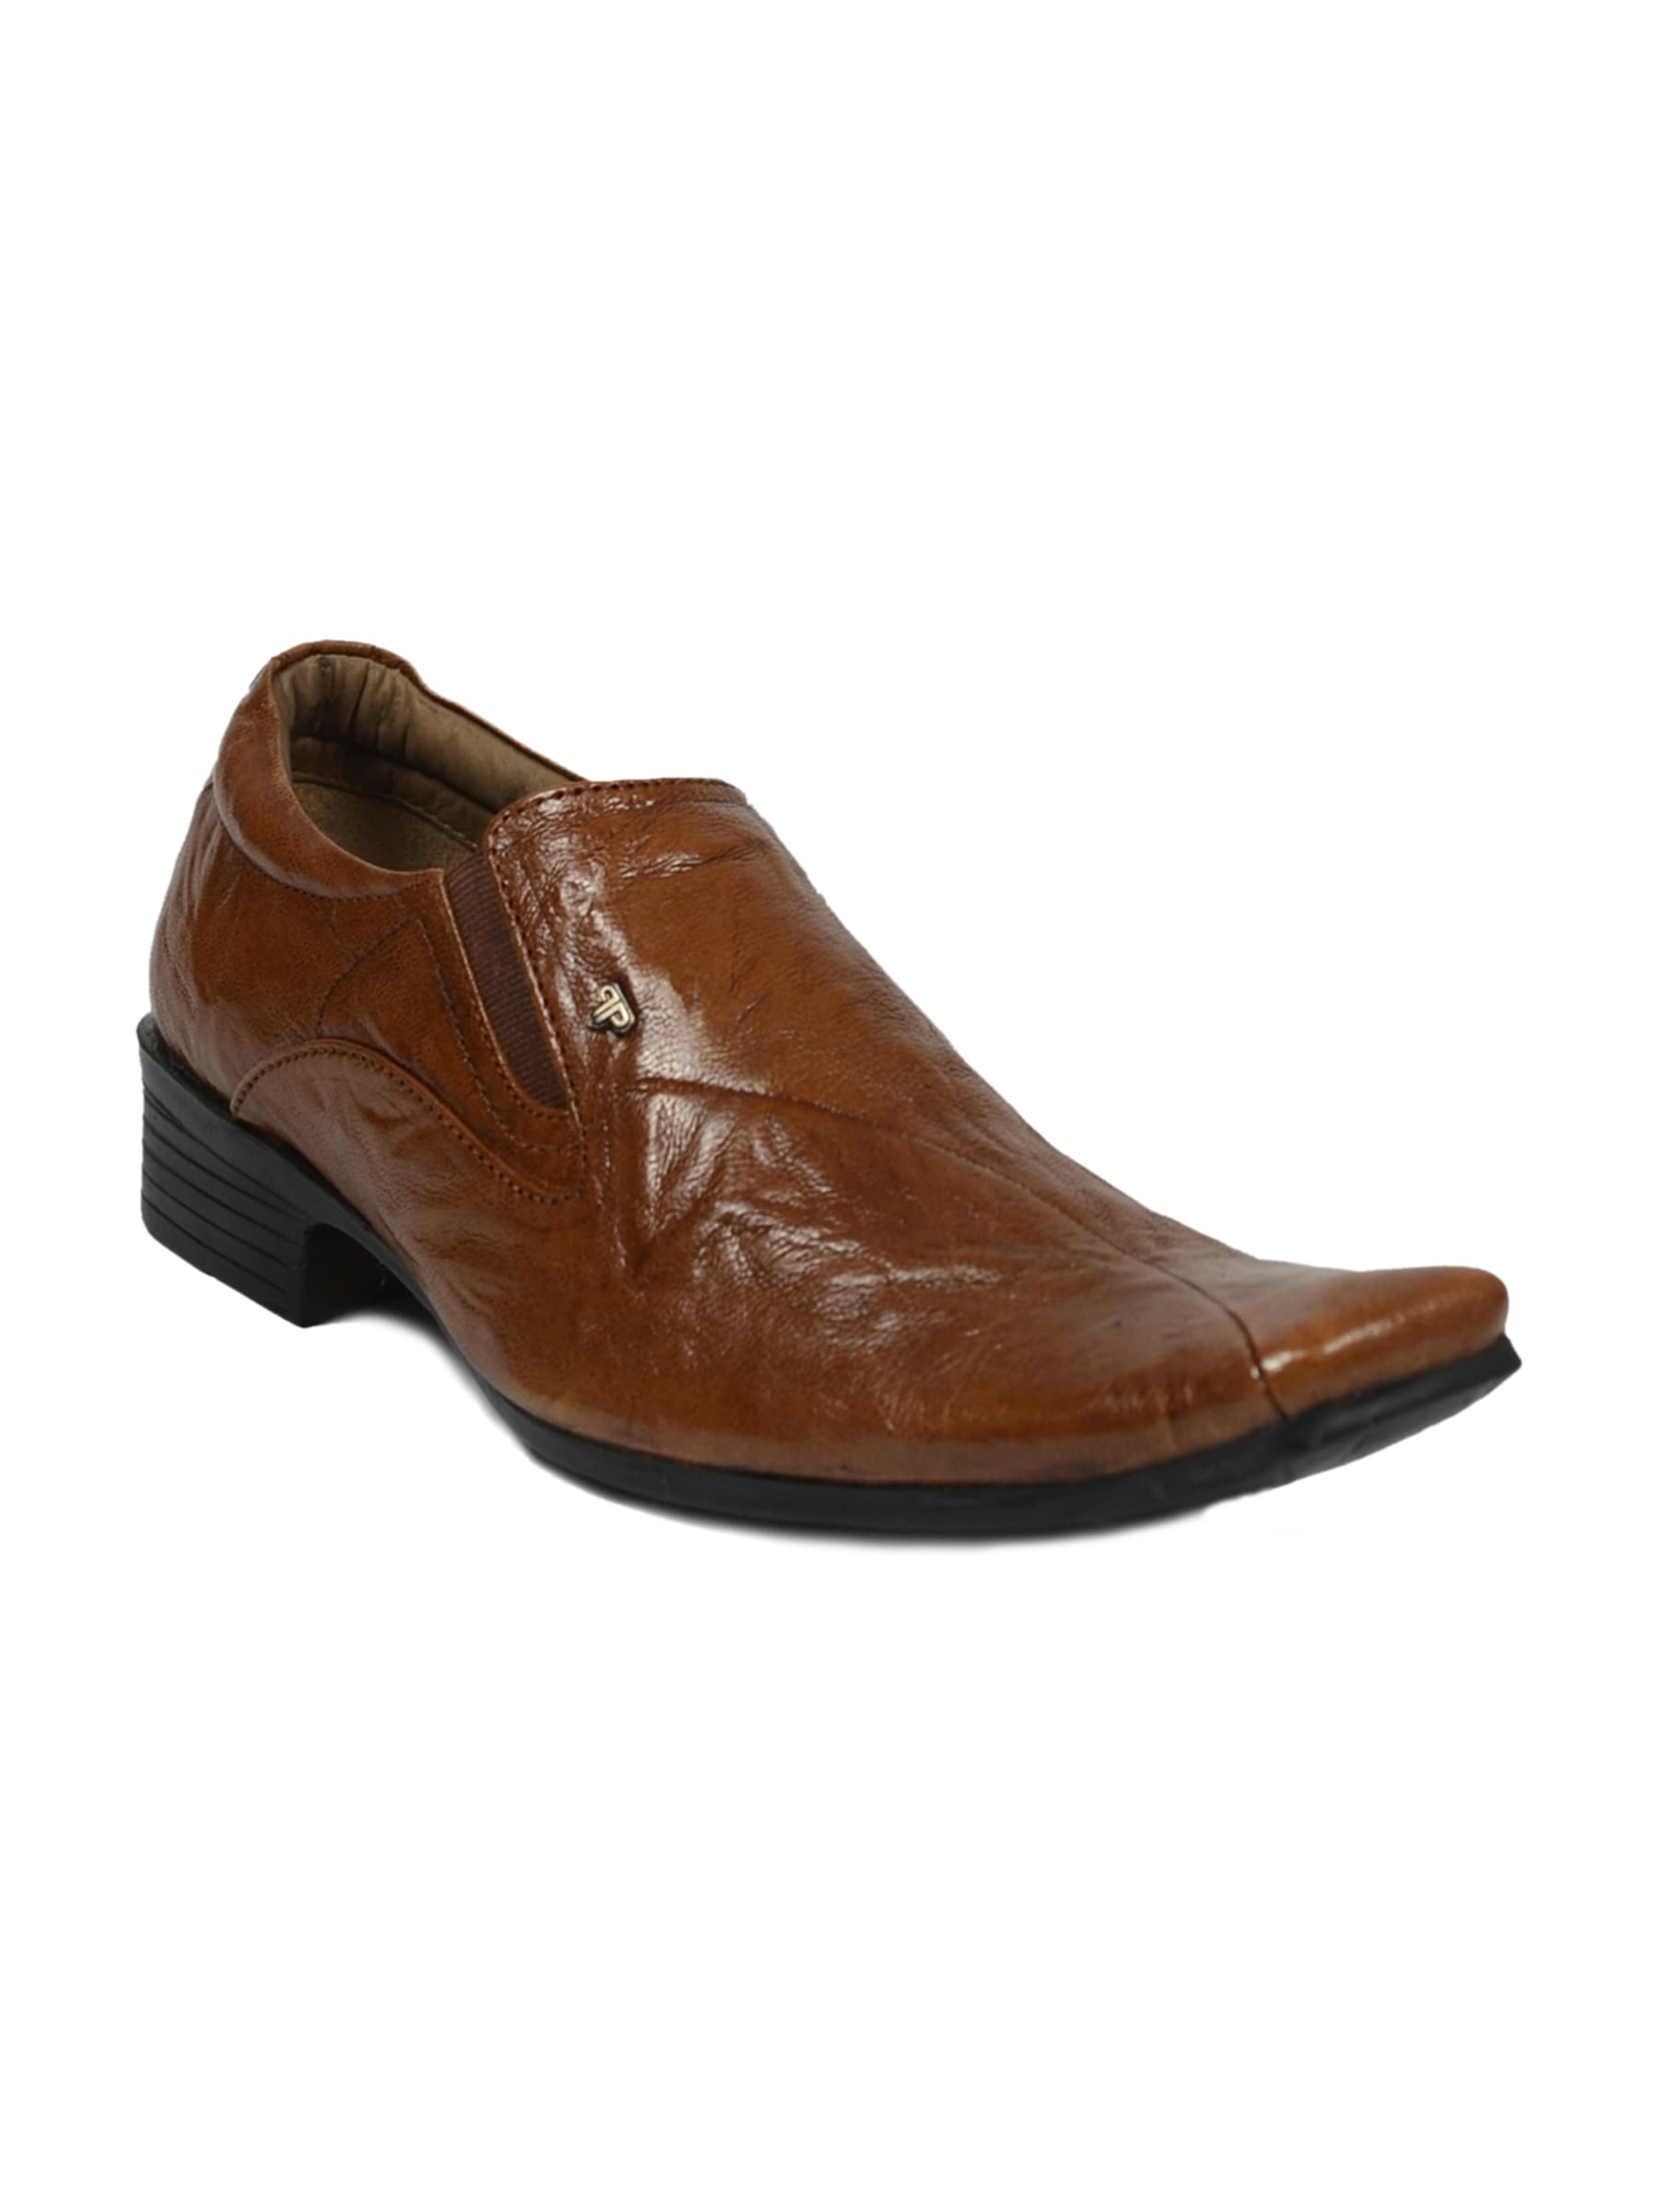 Provogue Men's Formal Tan Shoe